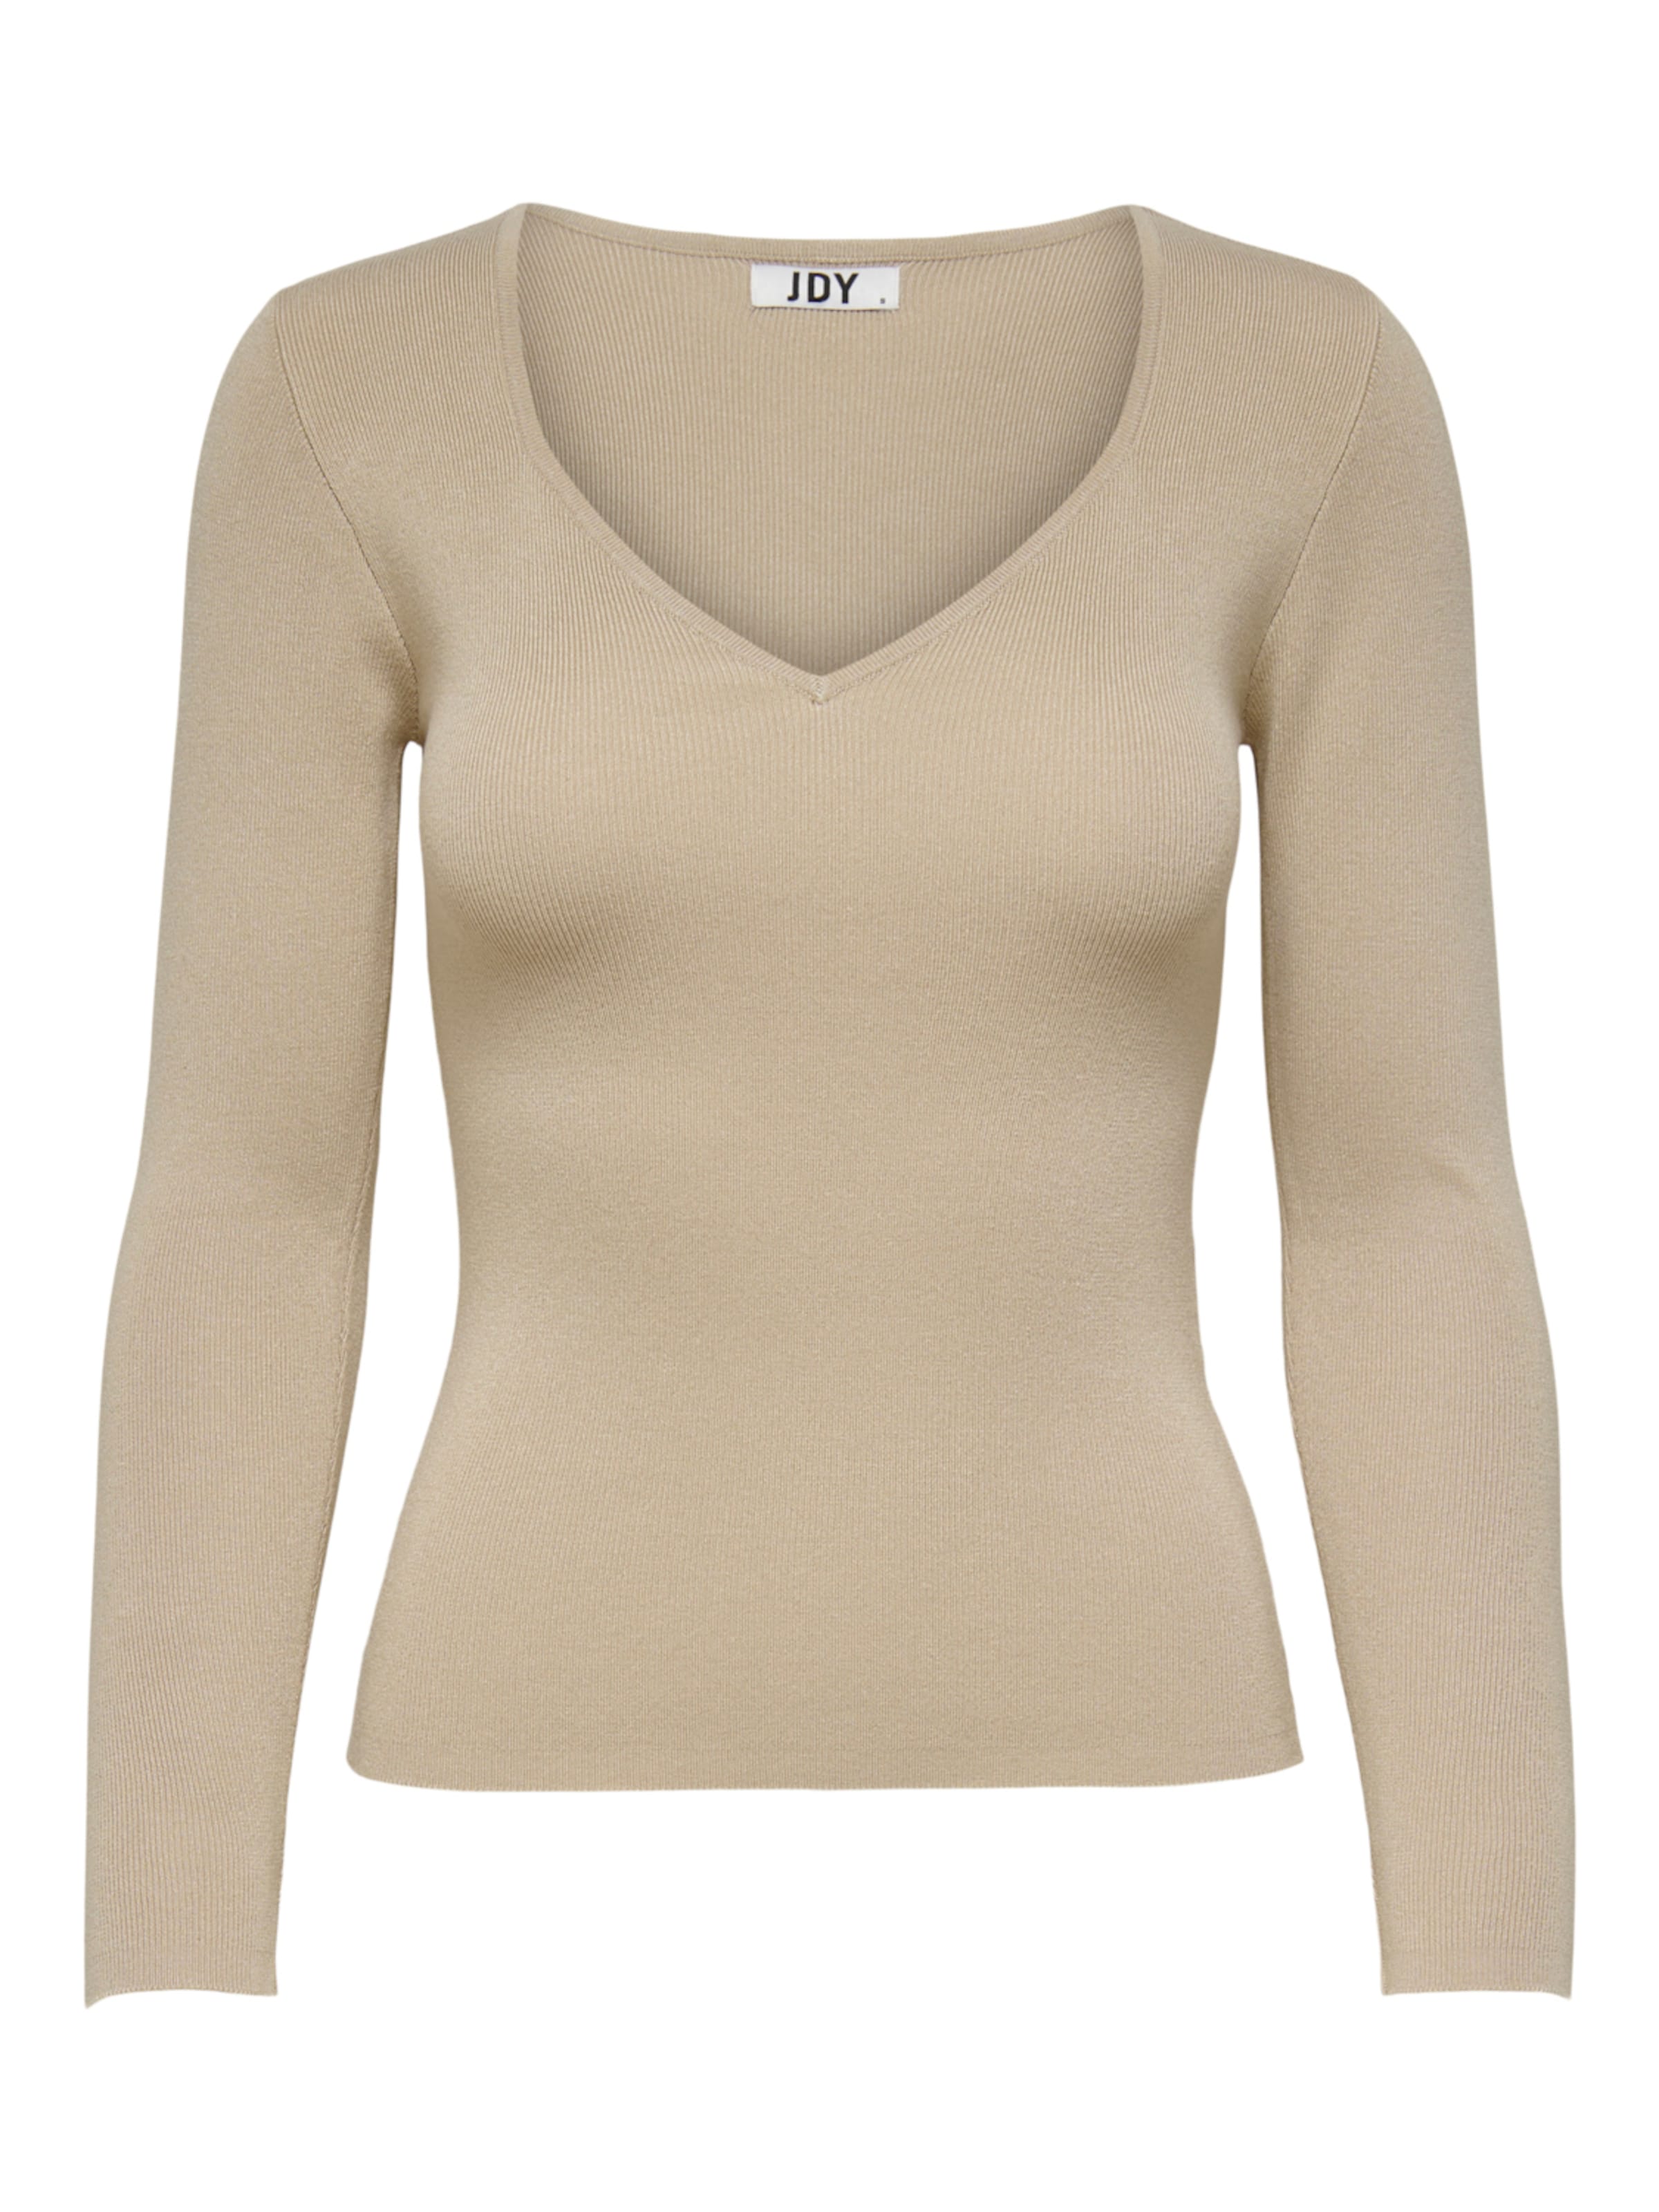 Rosa S DAMEN Pullovers & Sweatshirts Stickerei Rabatt 57 % Jaqueline de yong Pullover 